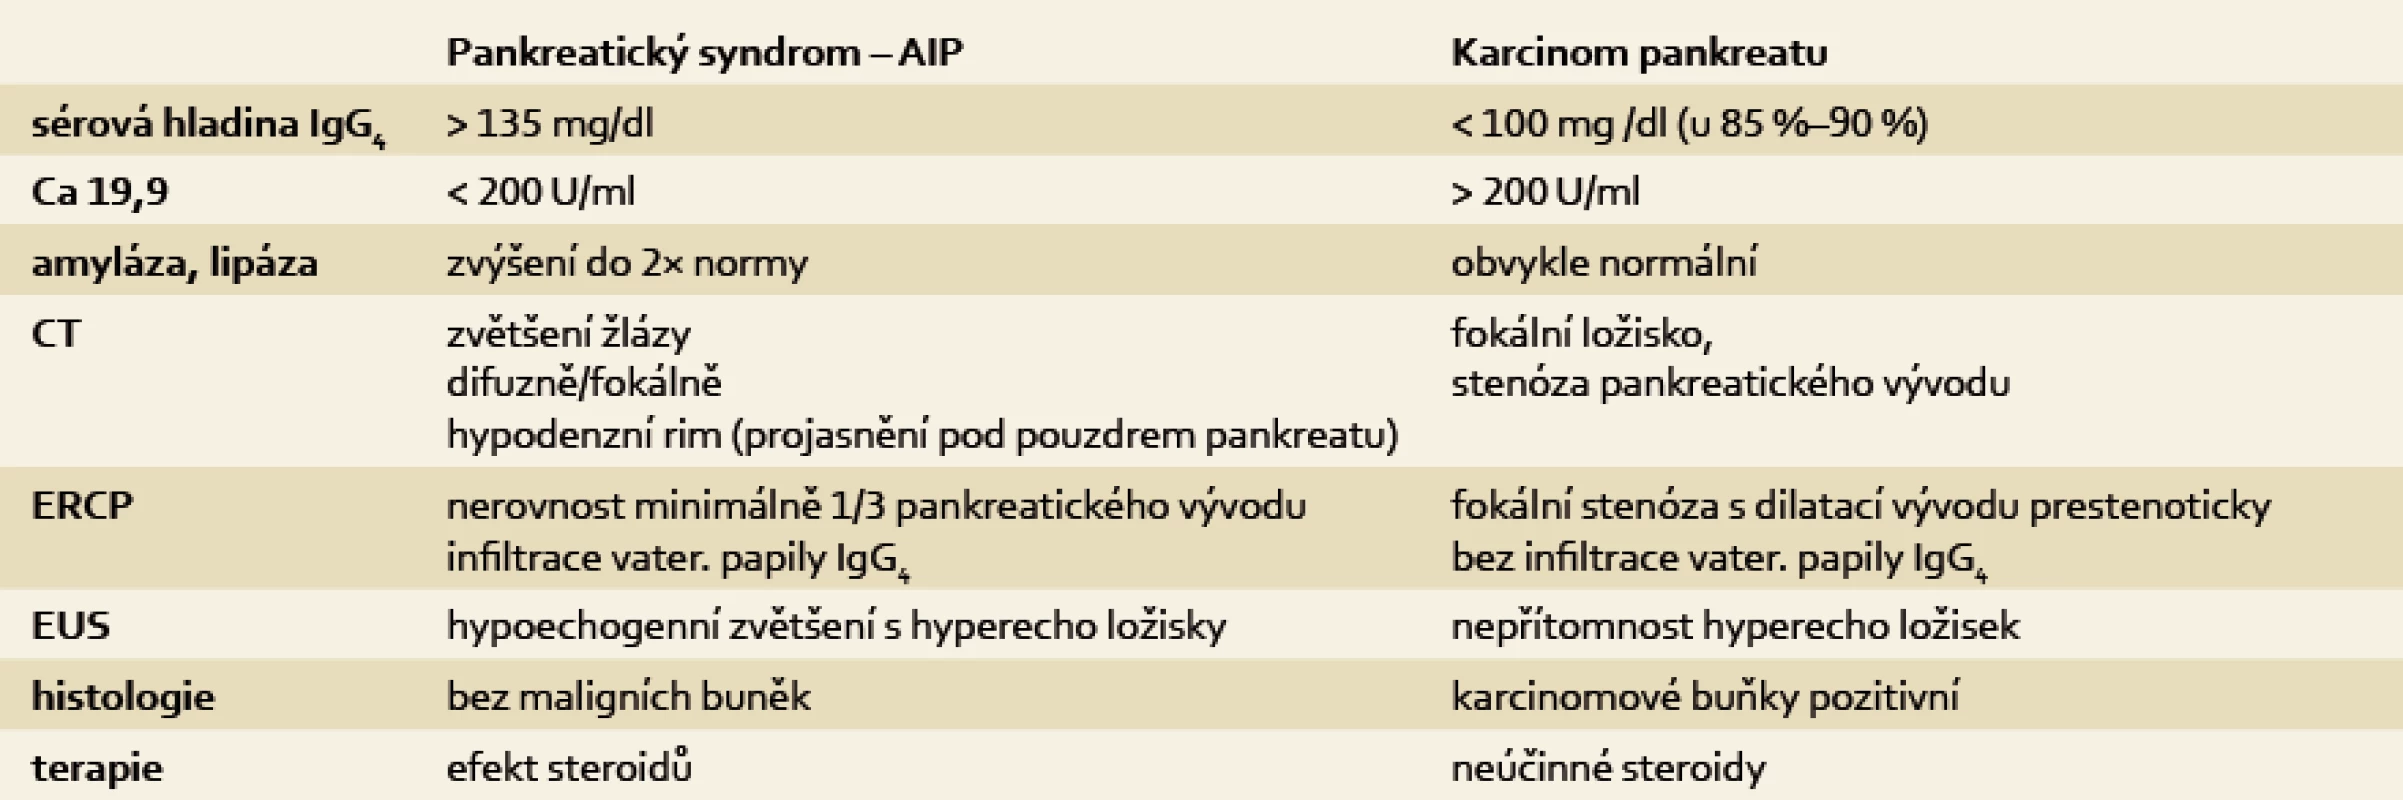 Diferenciální diagnostika aiP a karcinomu pankreatu. Upraveno podle Psarrase et al [11].
Tab. 3. Differential diagnosis of AIP and pancreatic cancer. Adapted by Psarras et al [11].